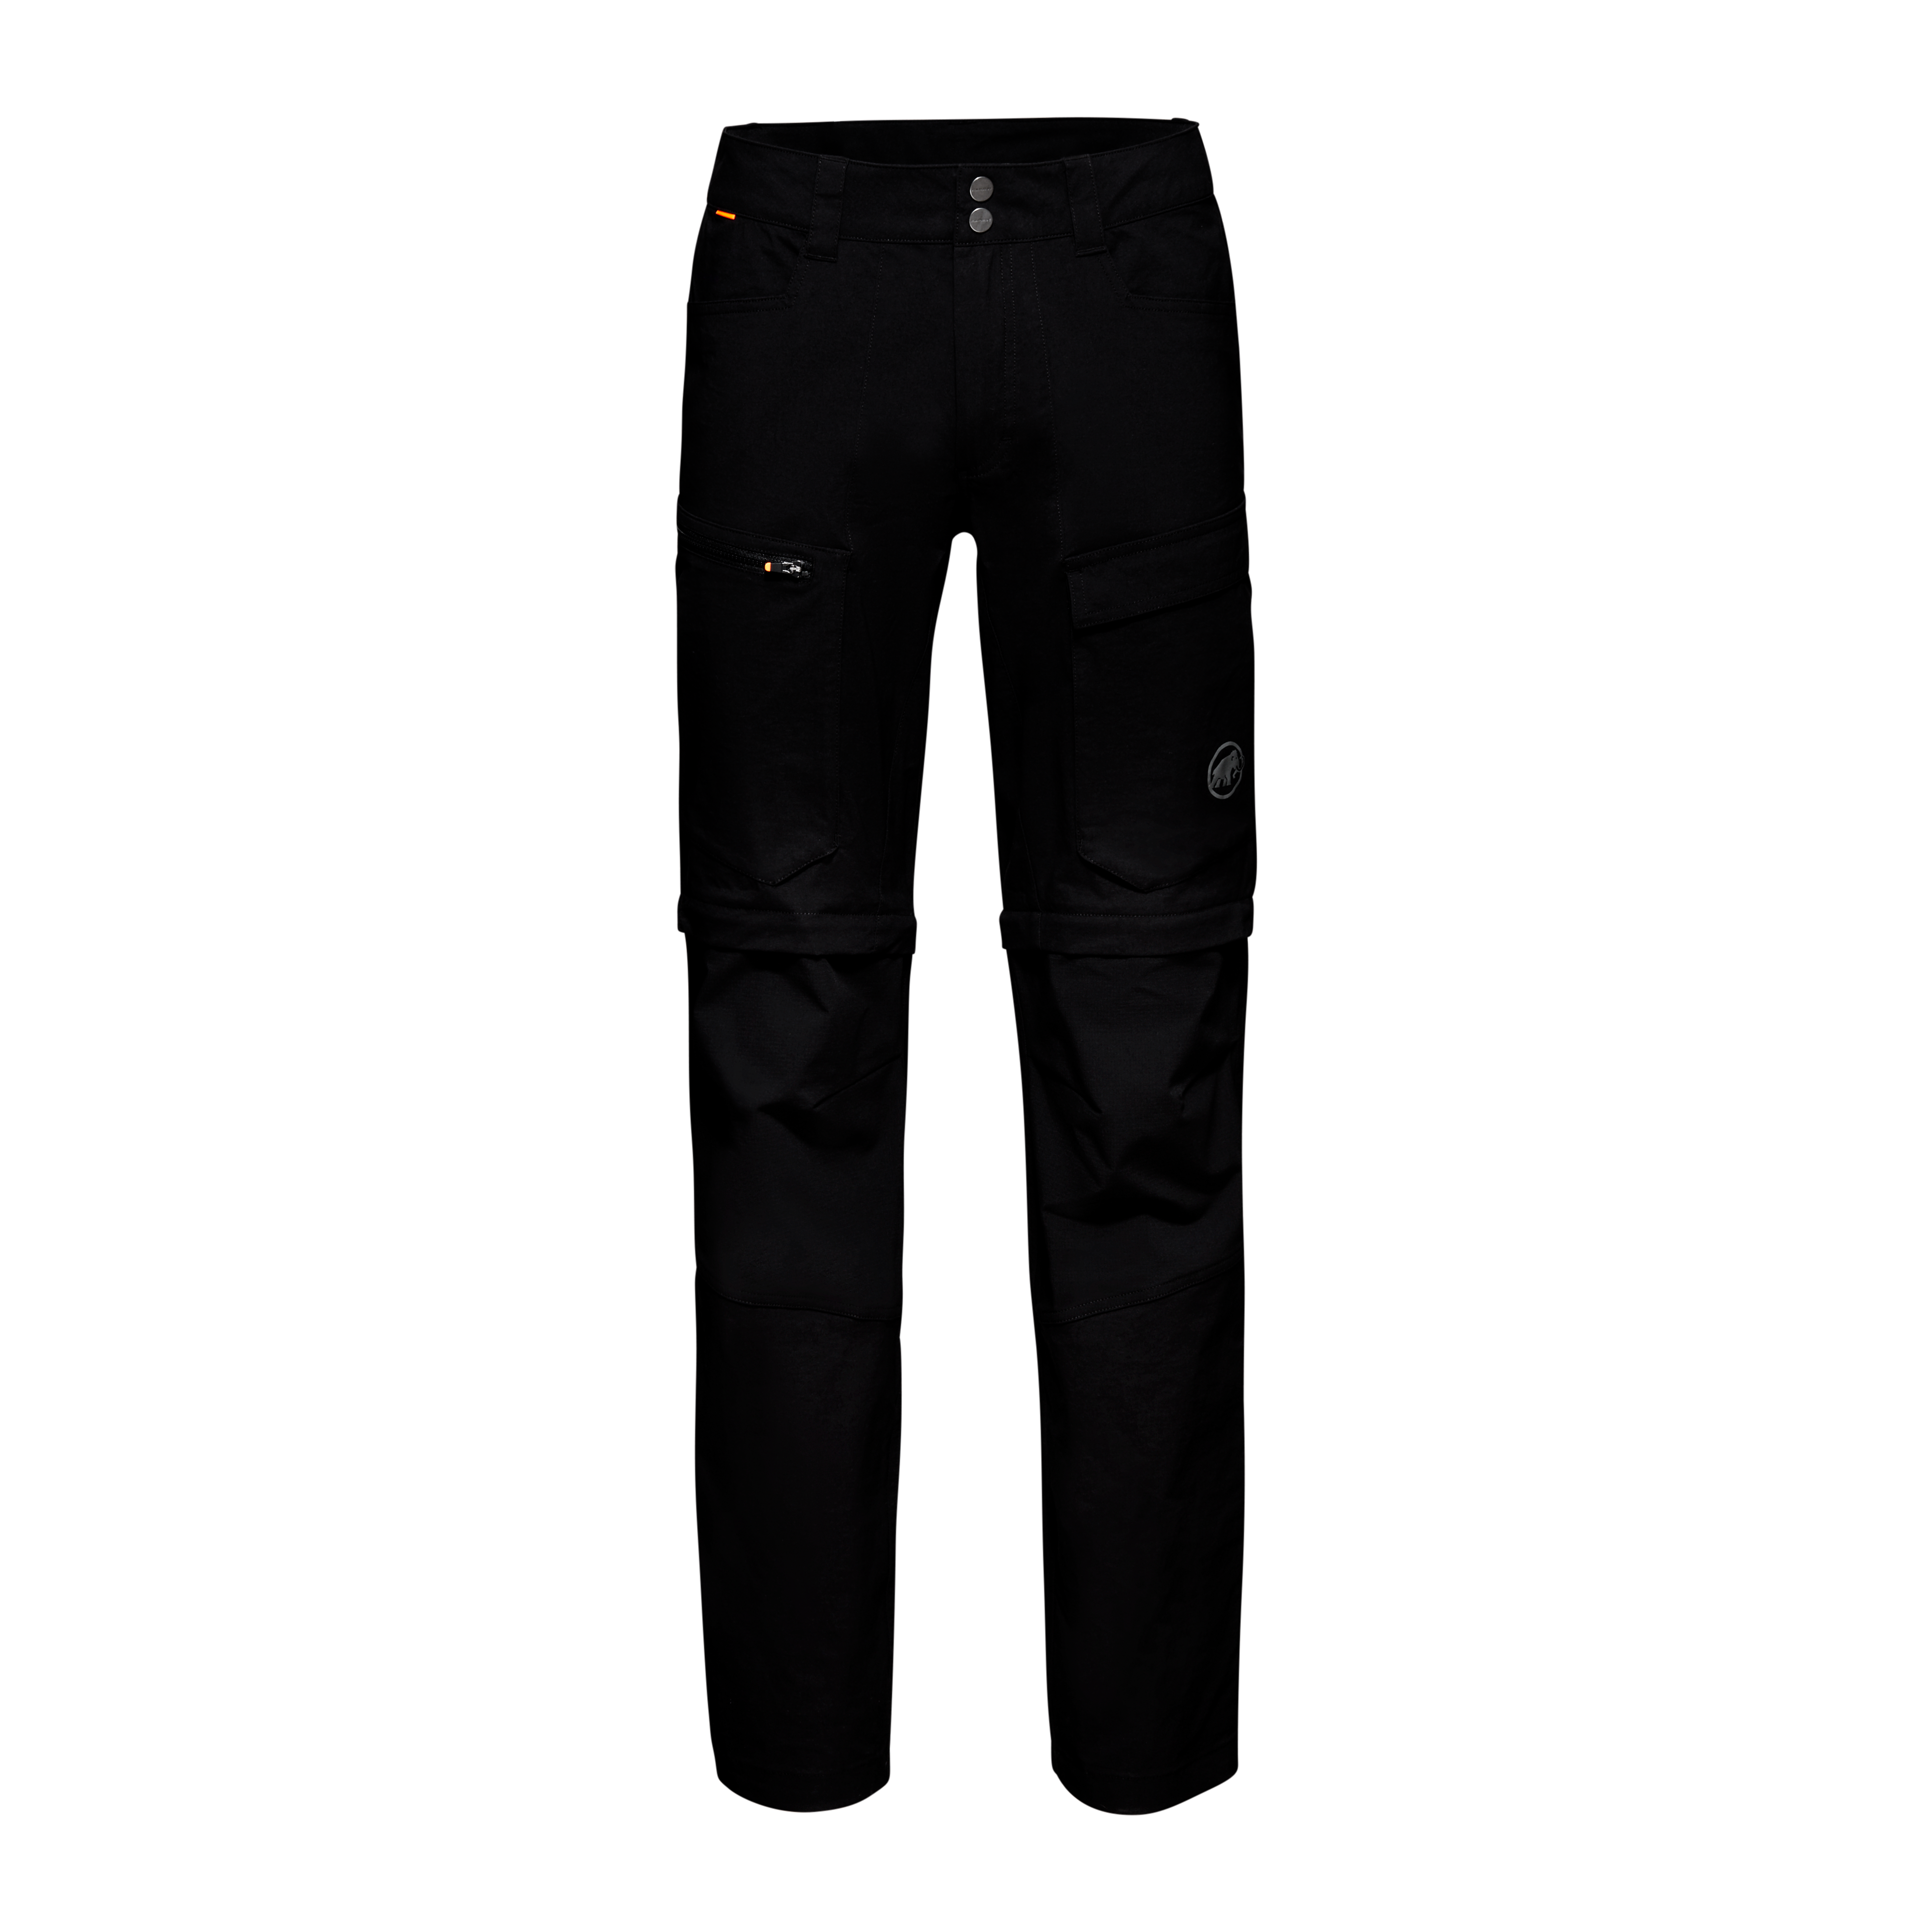 Zinal Hybrid Zip Off Pants Men - black, EU 56, kurz thumbnail